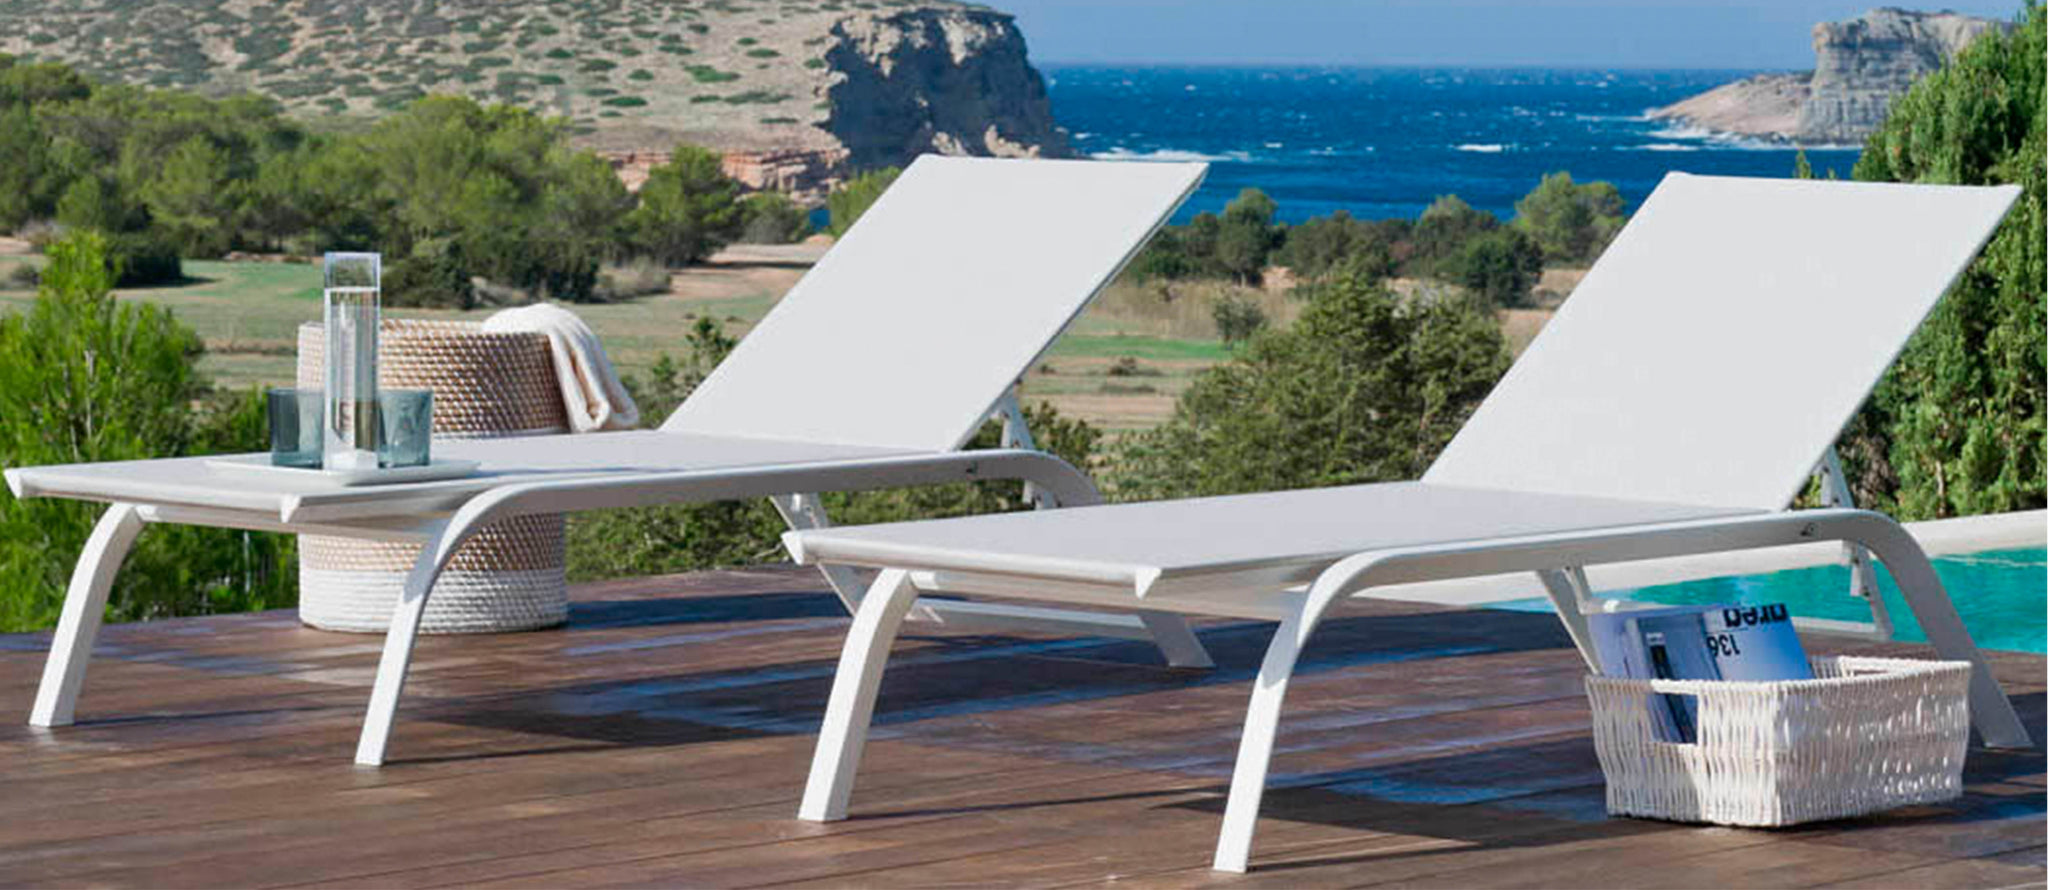 Knox Design Garden Furniture in Mallorca